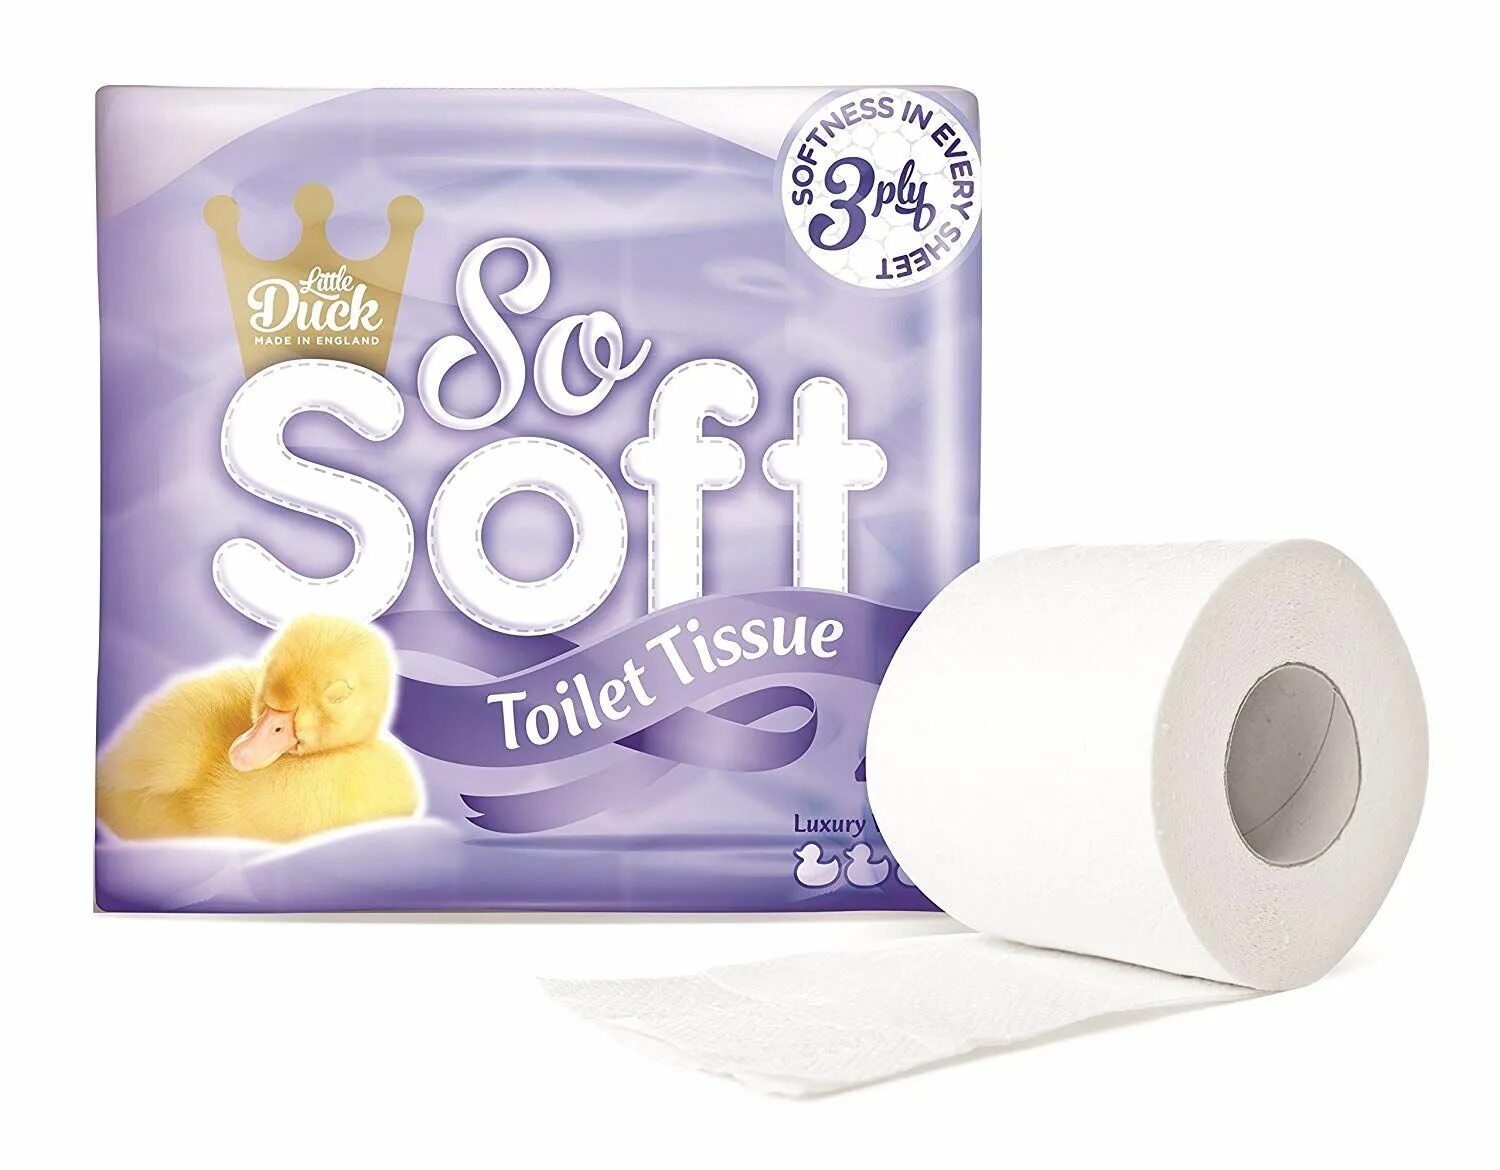 Пачка туалетной бумаги. Упаковка туалетной бумаги. Туалетная бумага Soft. Дизайн туалетной бумаги. Туалетная бумага дизайн упаковки.